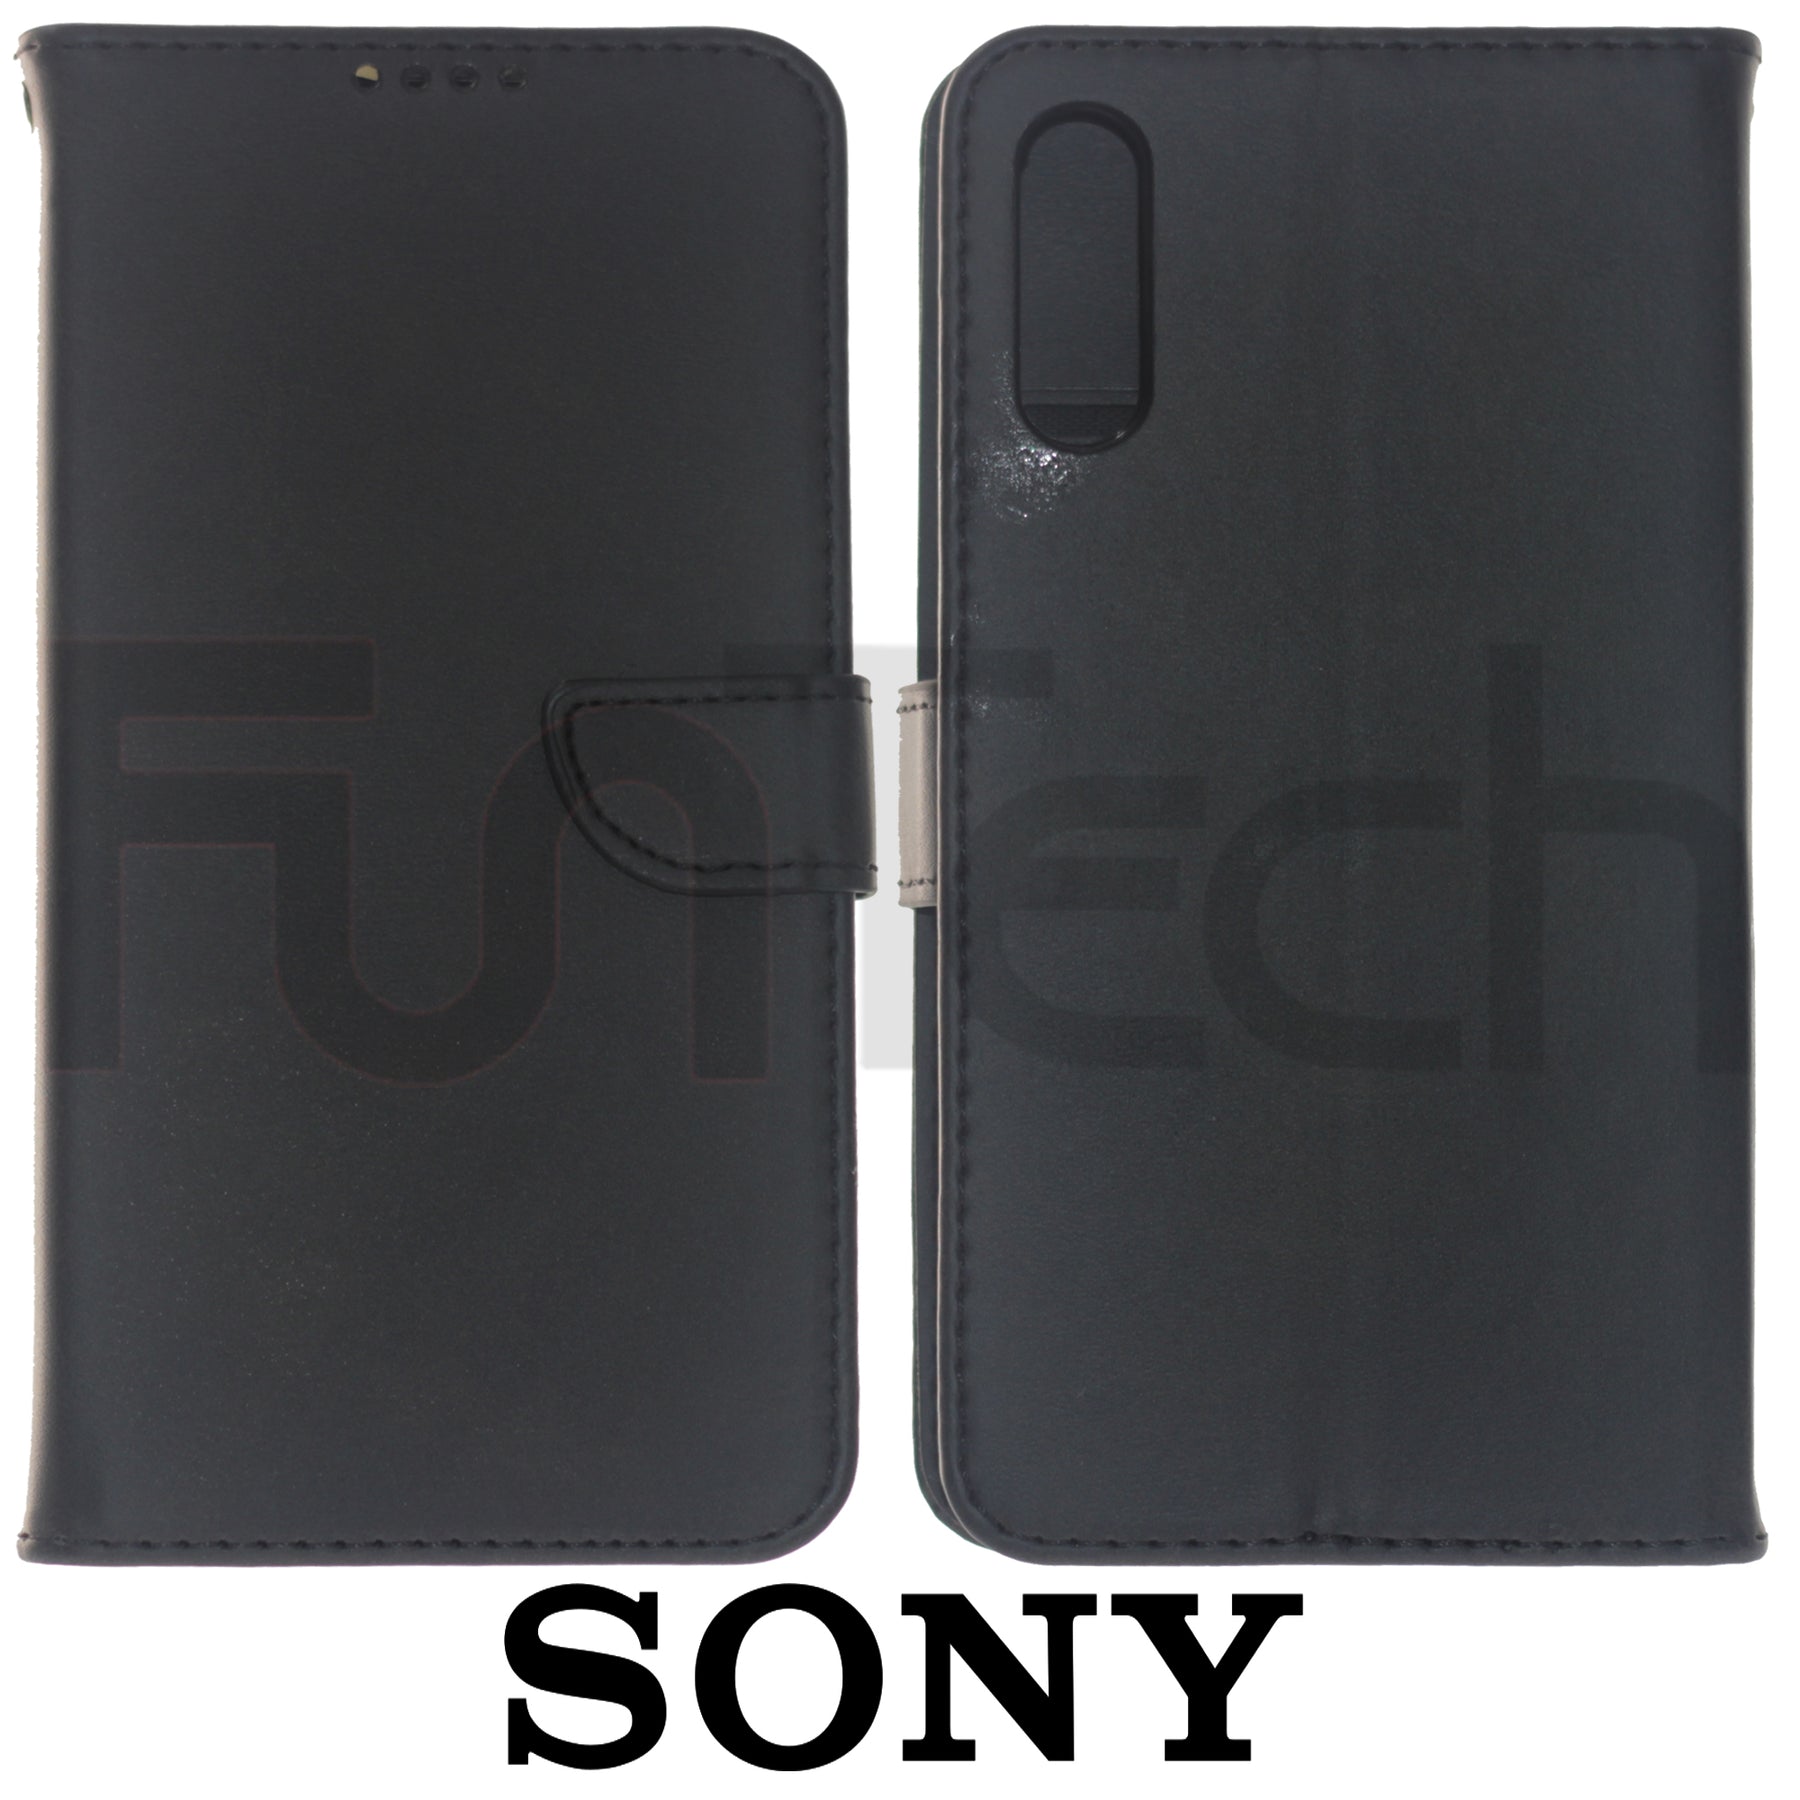 Sony, Case, Color Black.